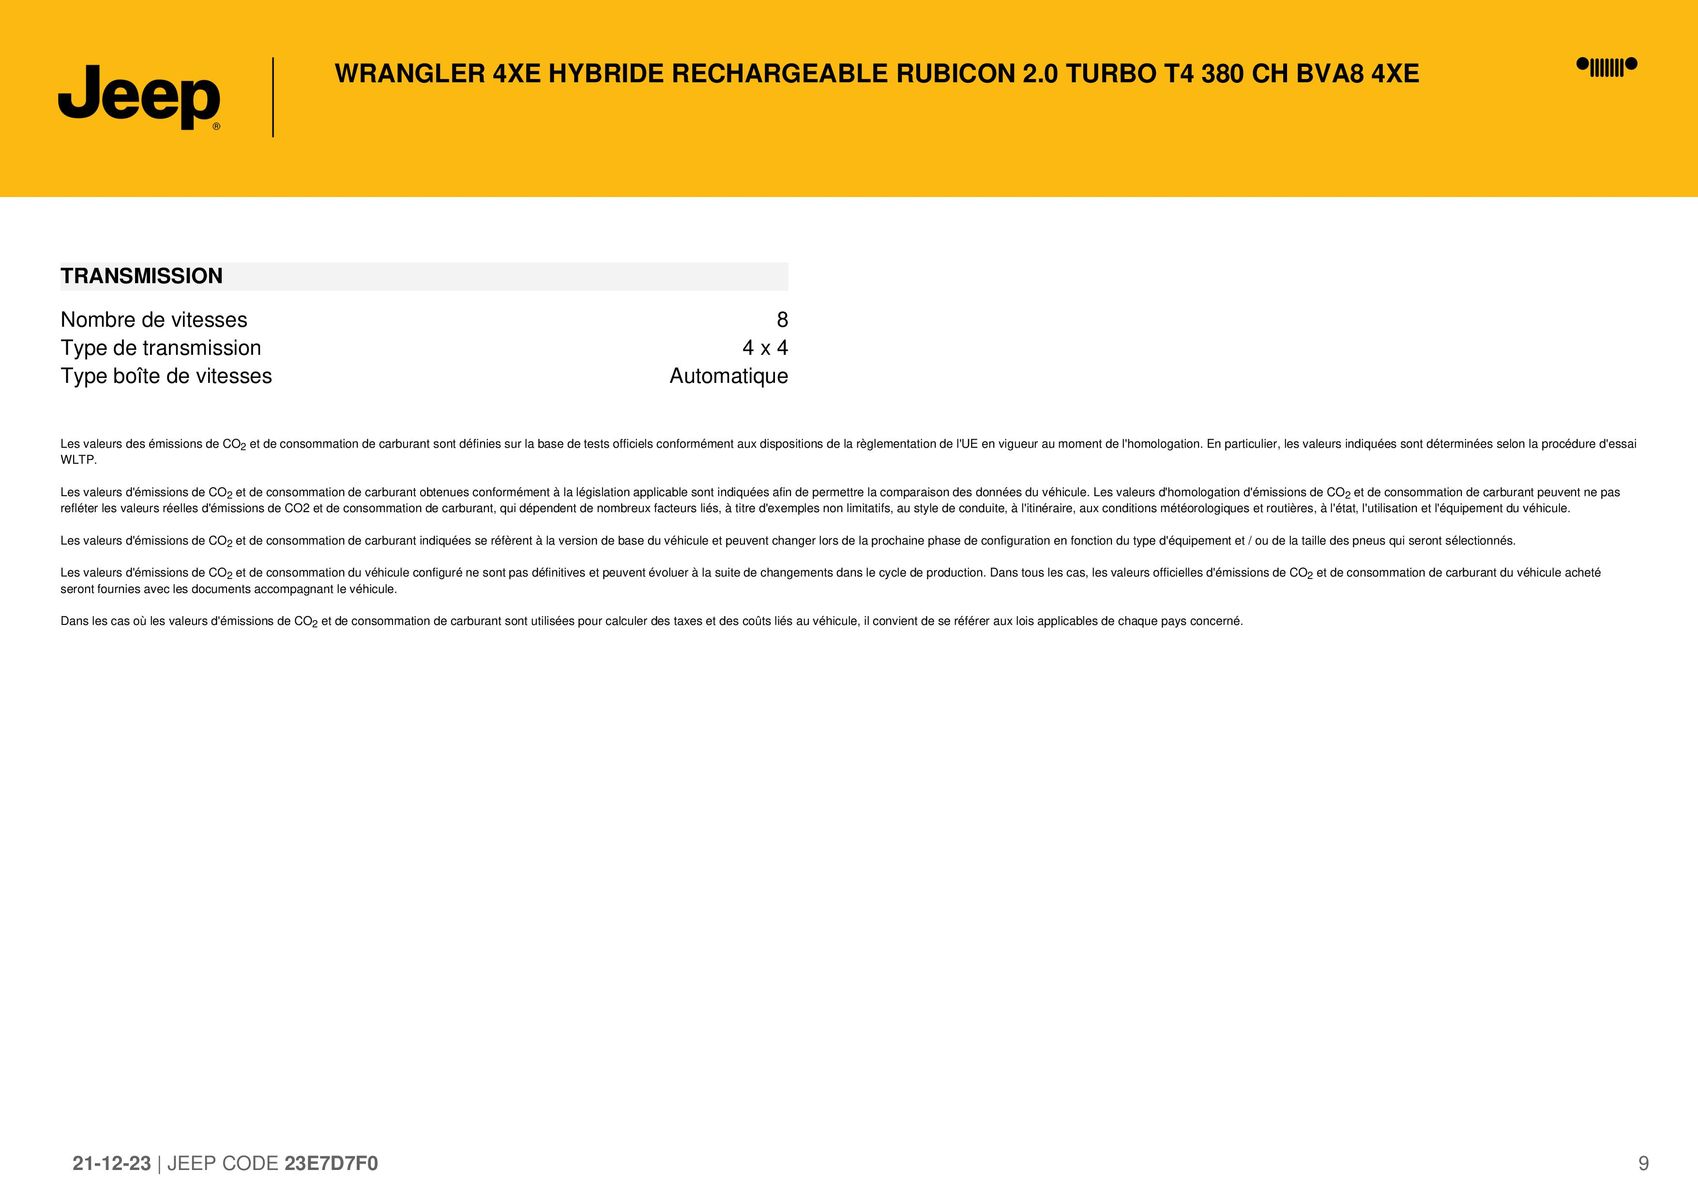 Catalogue WRANGLER 4XE HYBRIDE RECHARGEABLE RUBICON 2.0 TURBO T4 380 CH BVA8 4XE|, page 00009